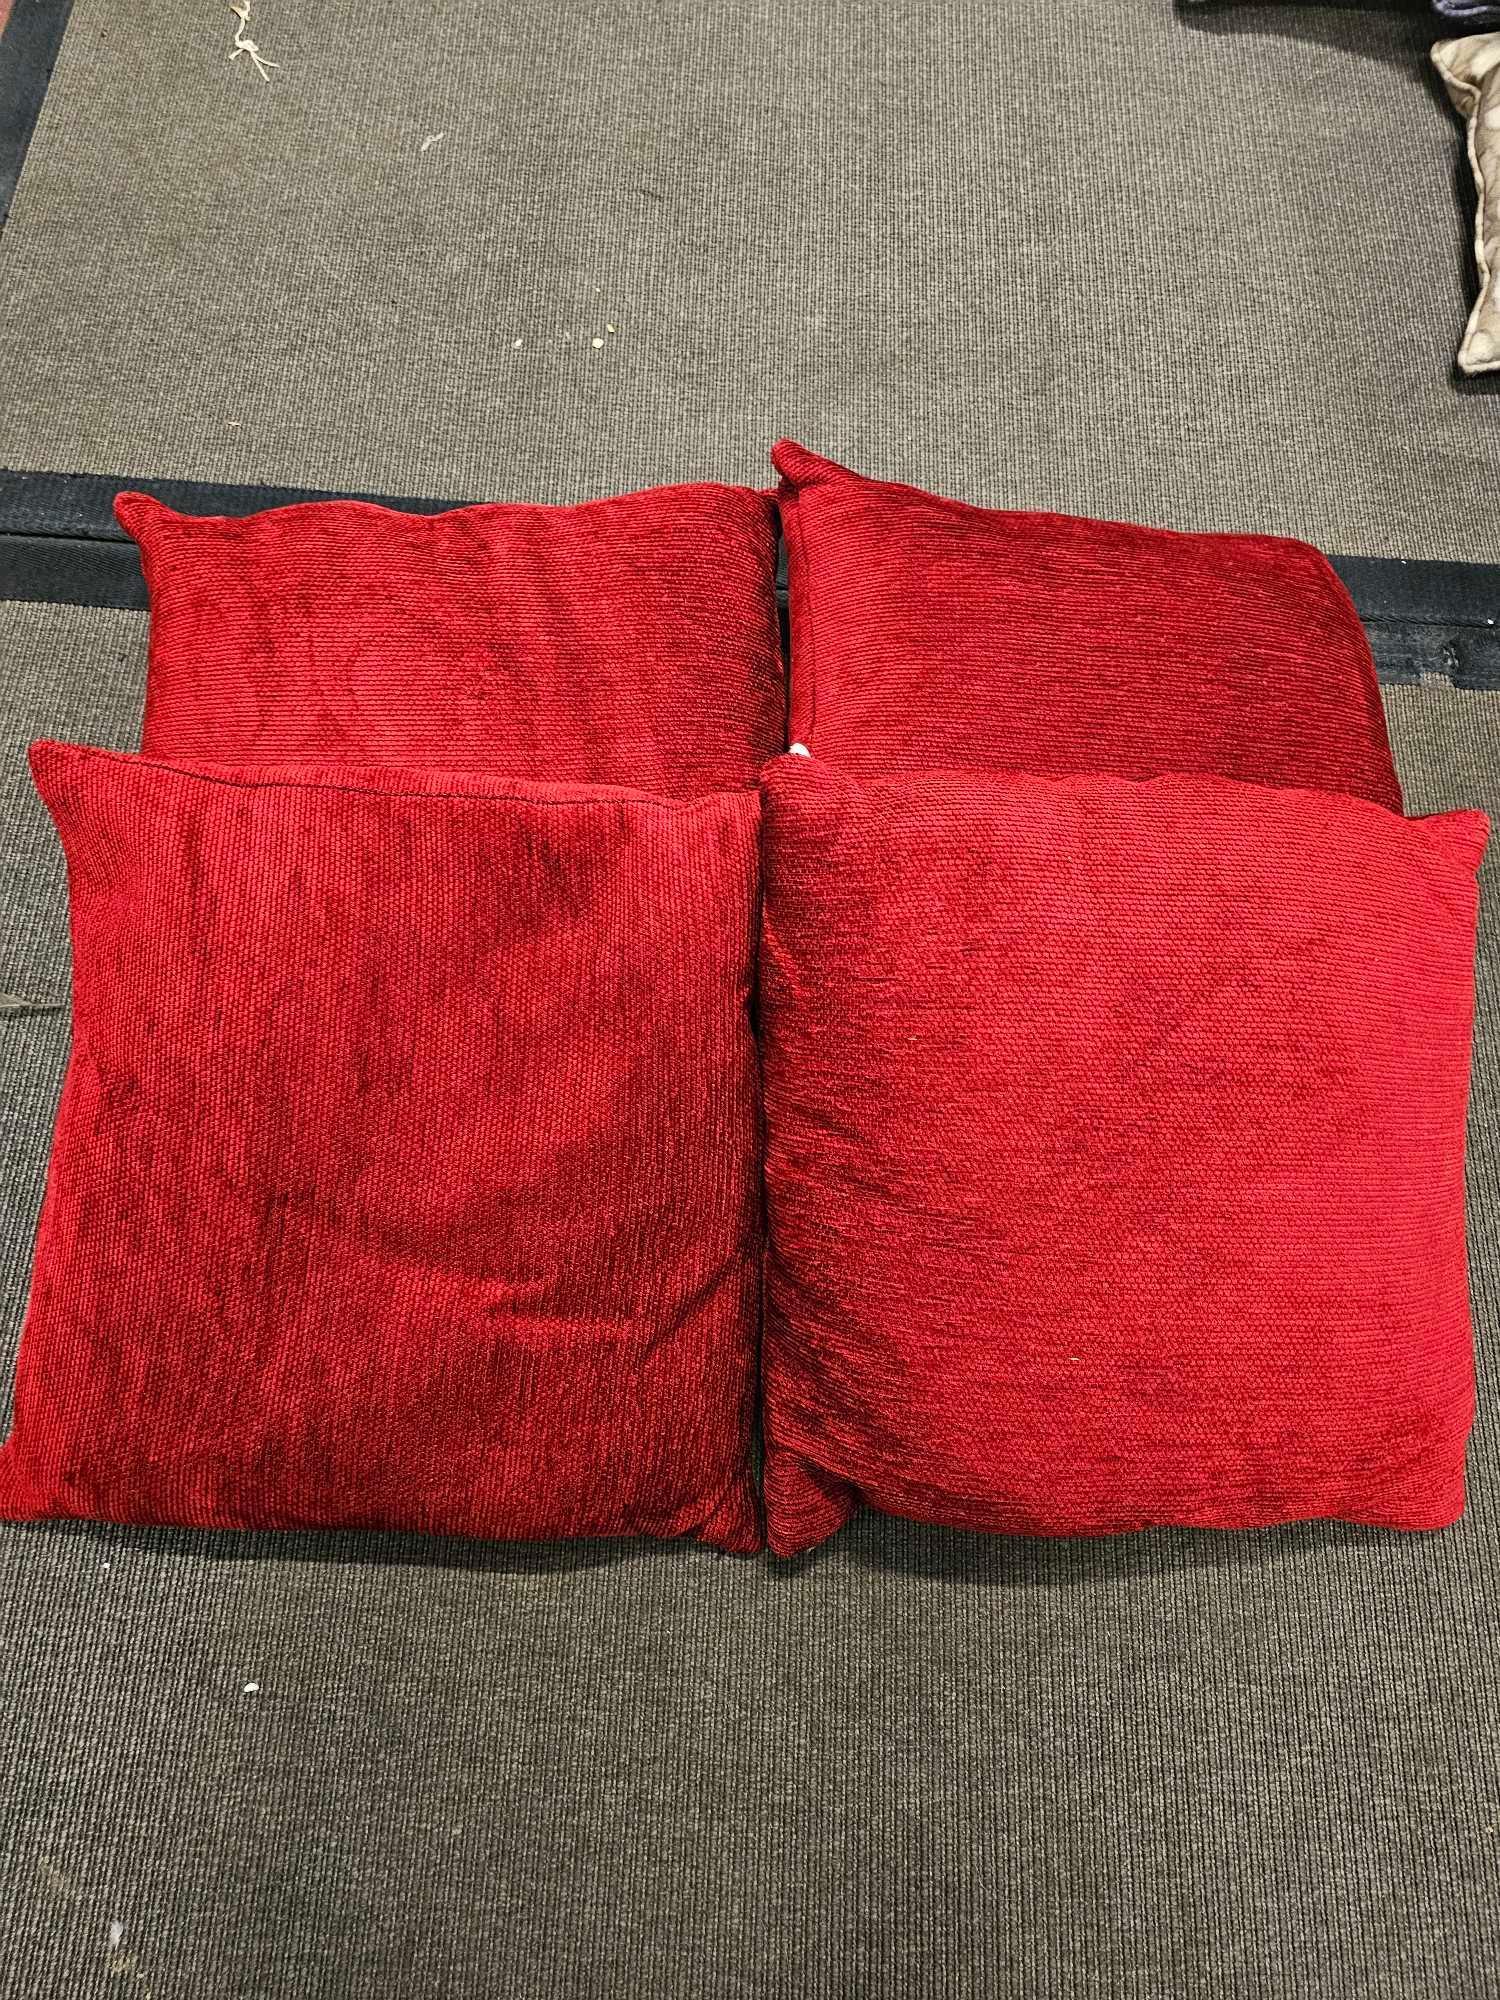 4 x Corded Red Cushions Size 45 x 45cm ( Ref Cush 125)